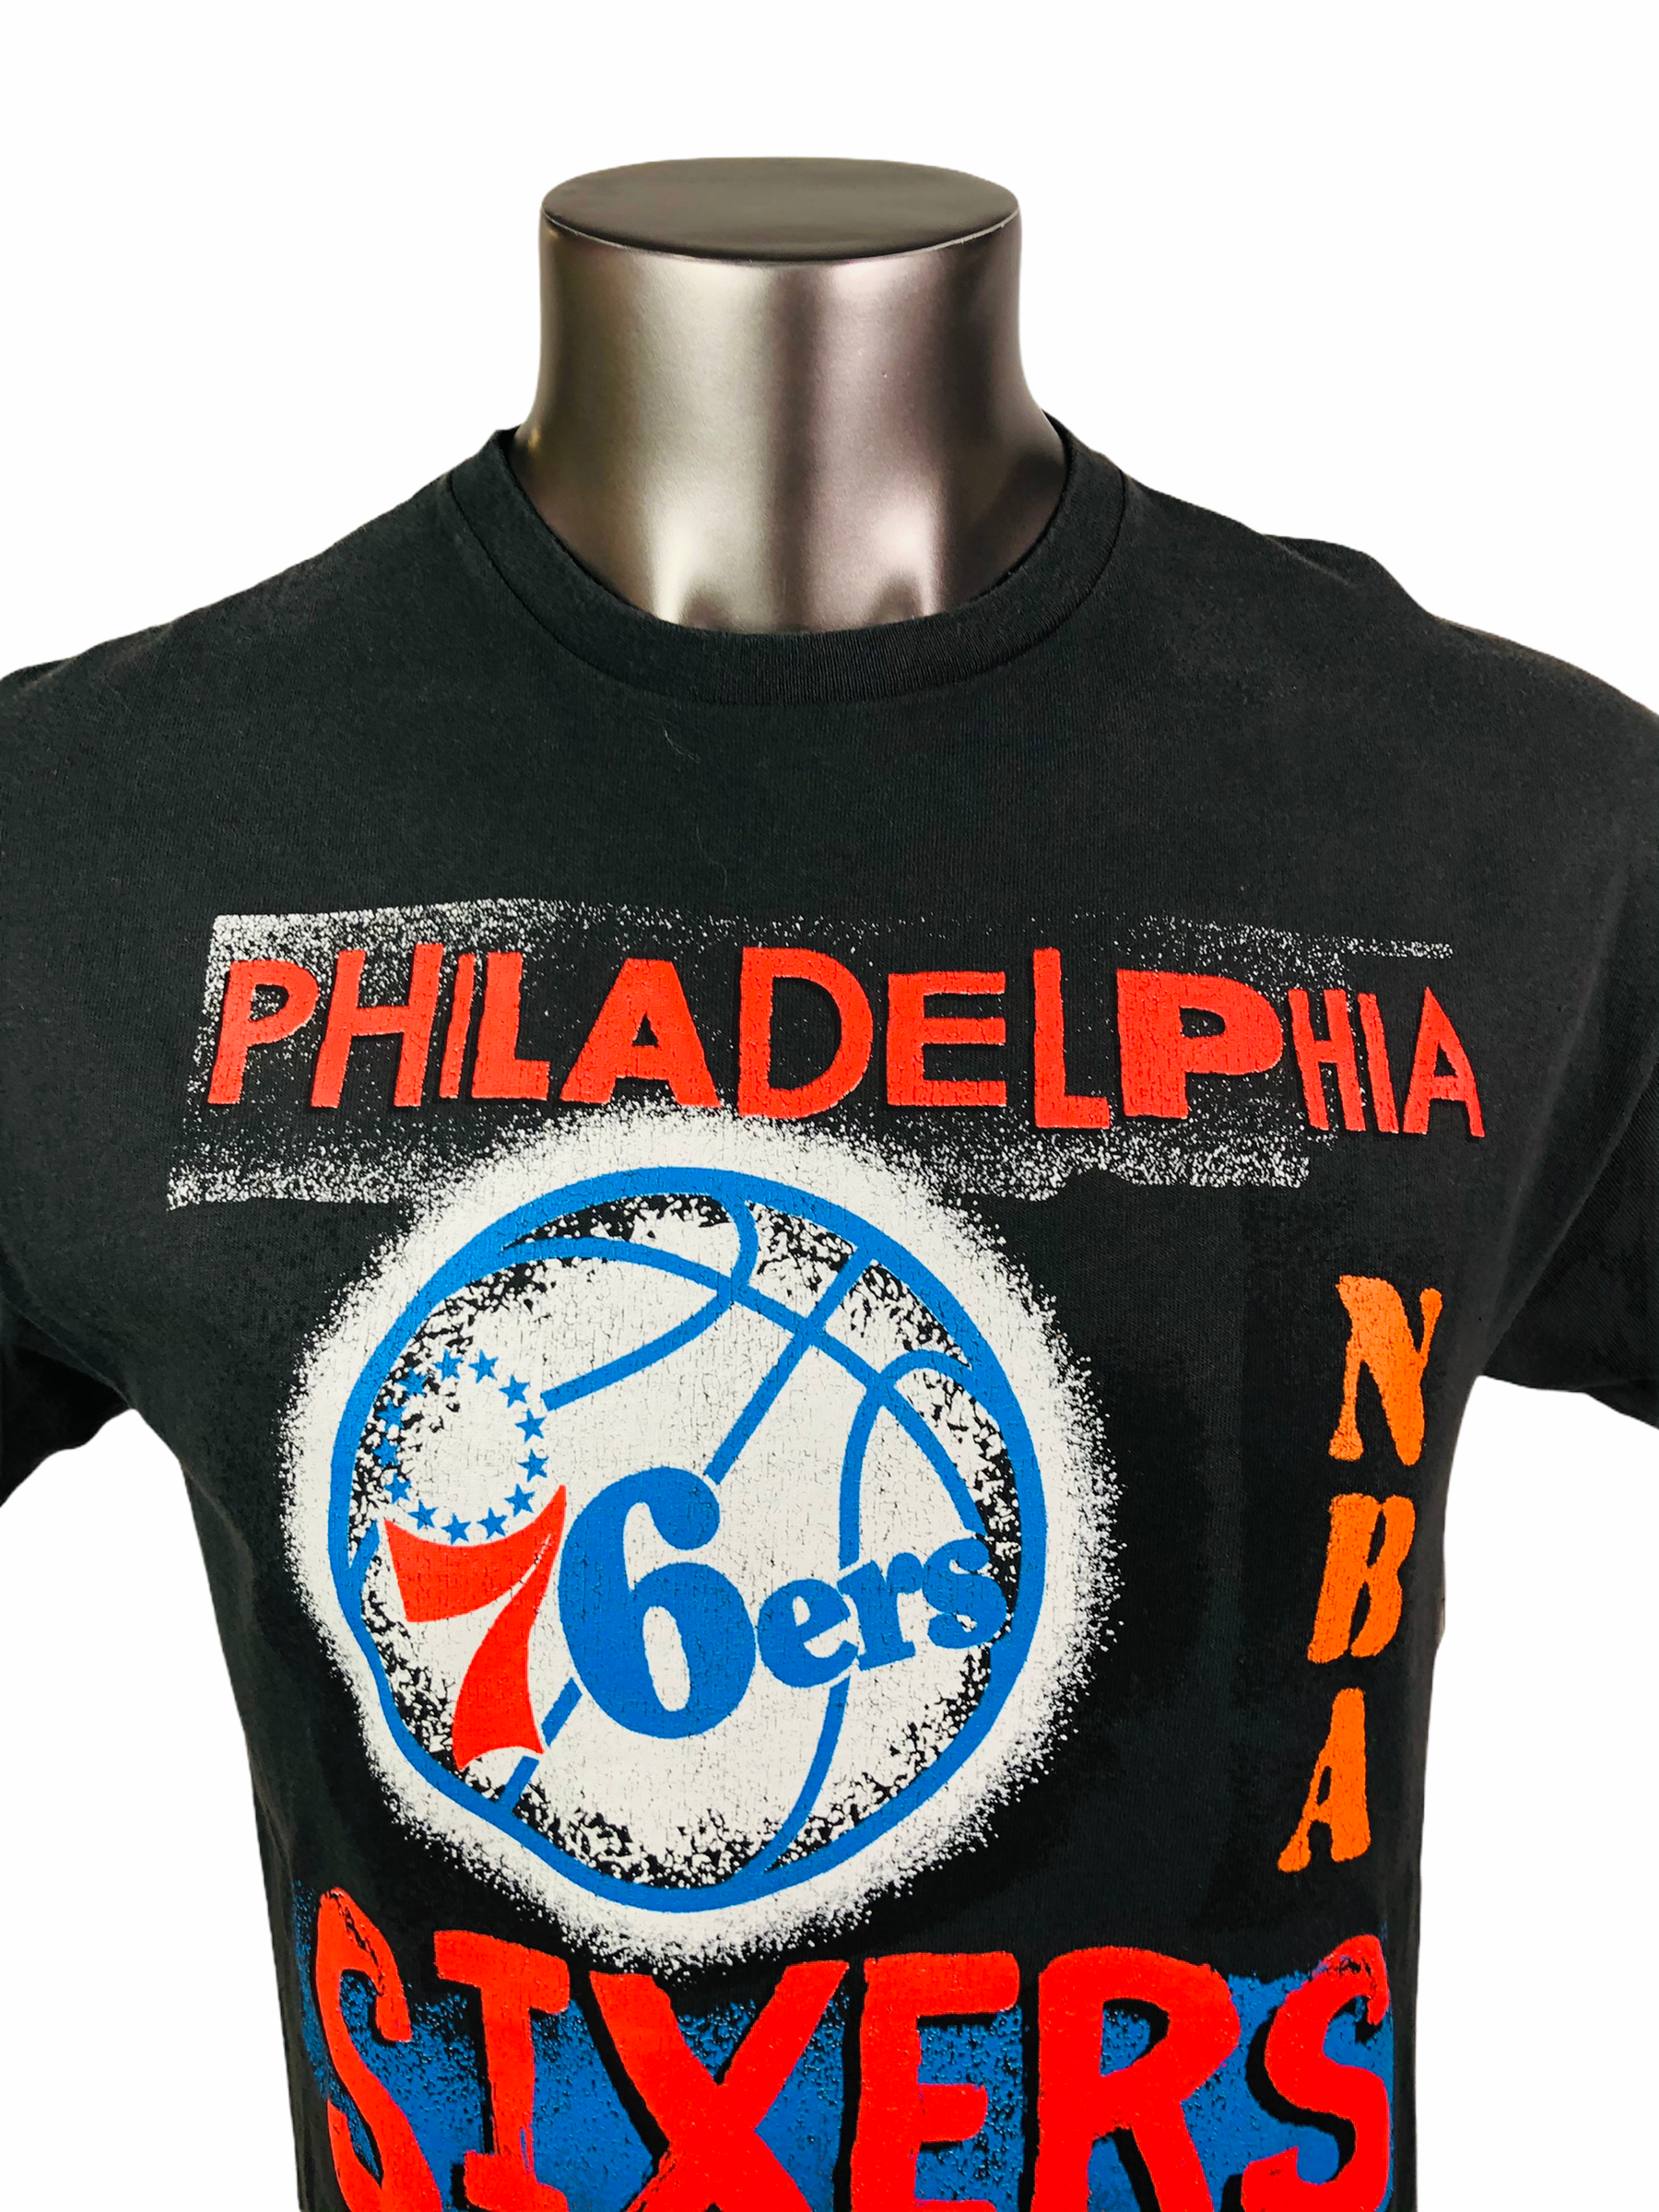 Vintage Philadelphia 76ers shirts, hats, hoodies and apparel